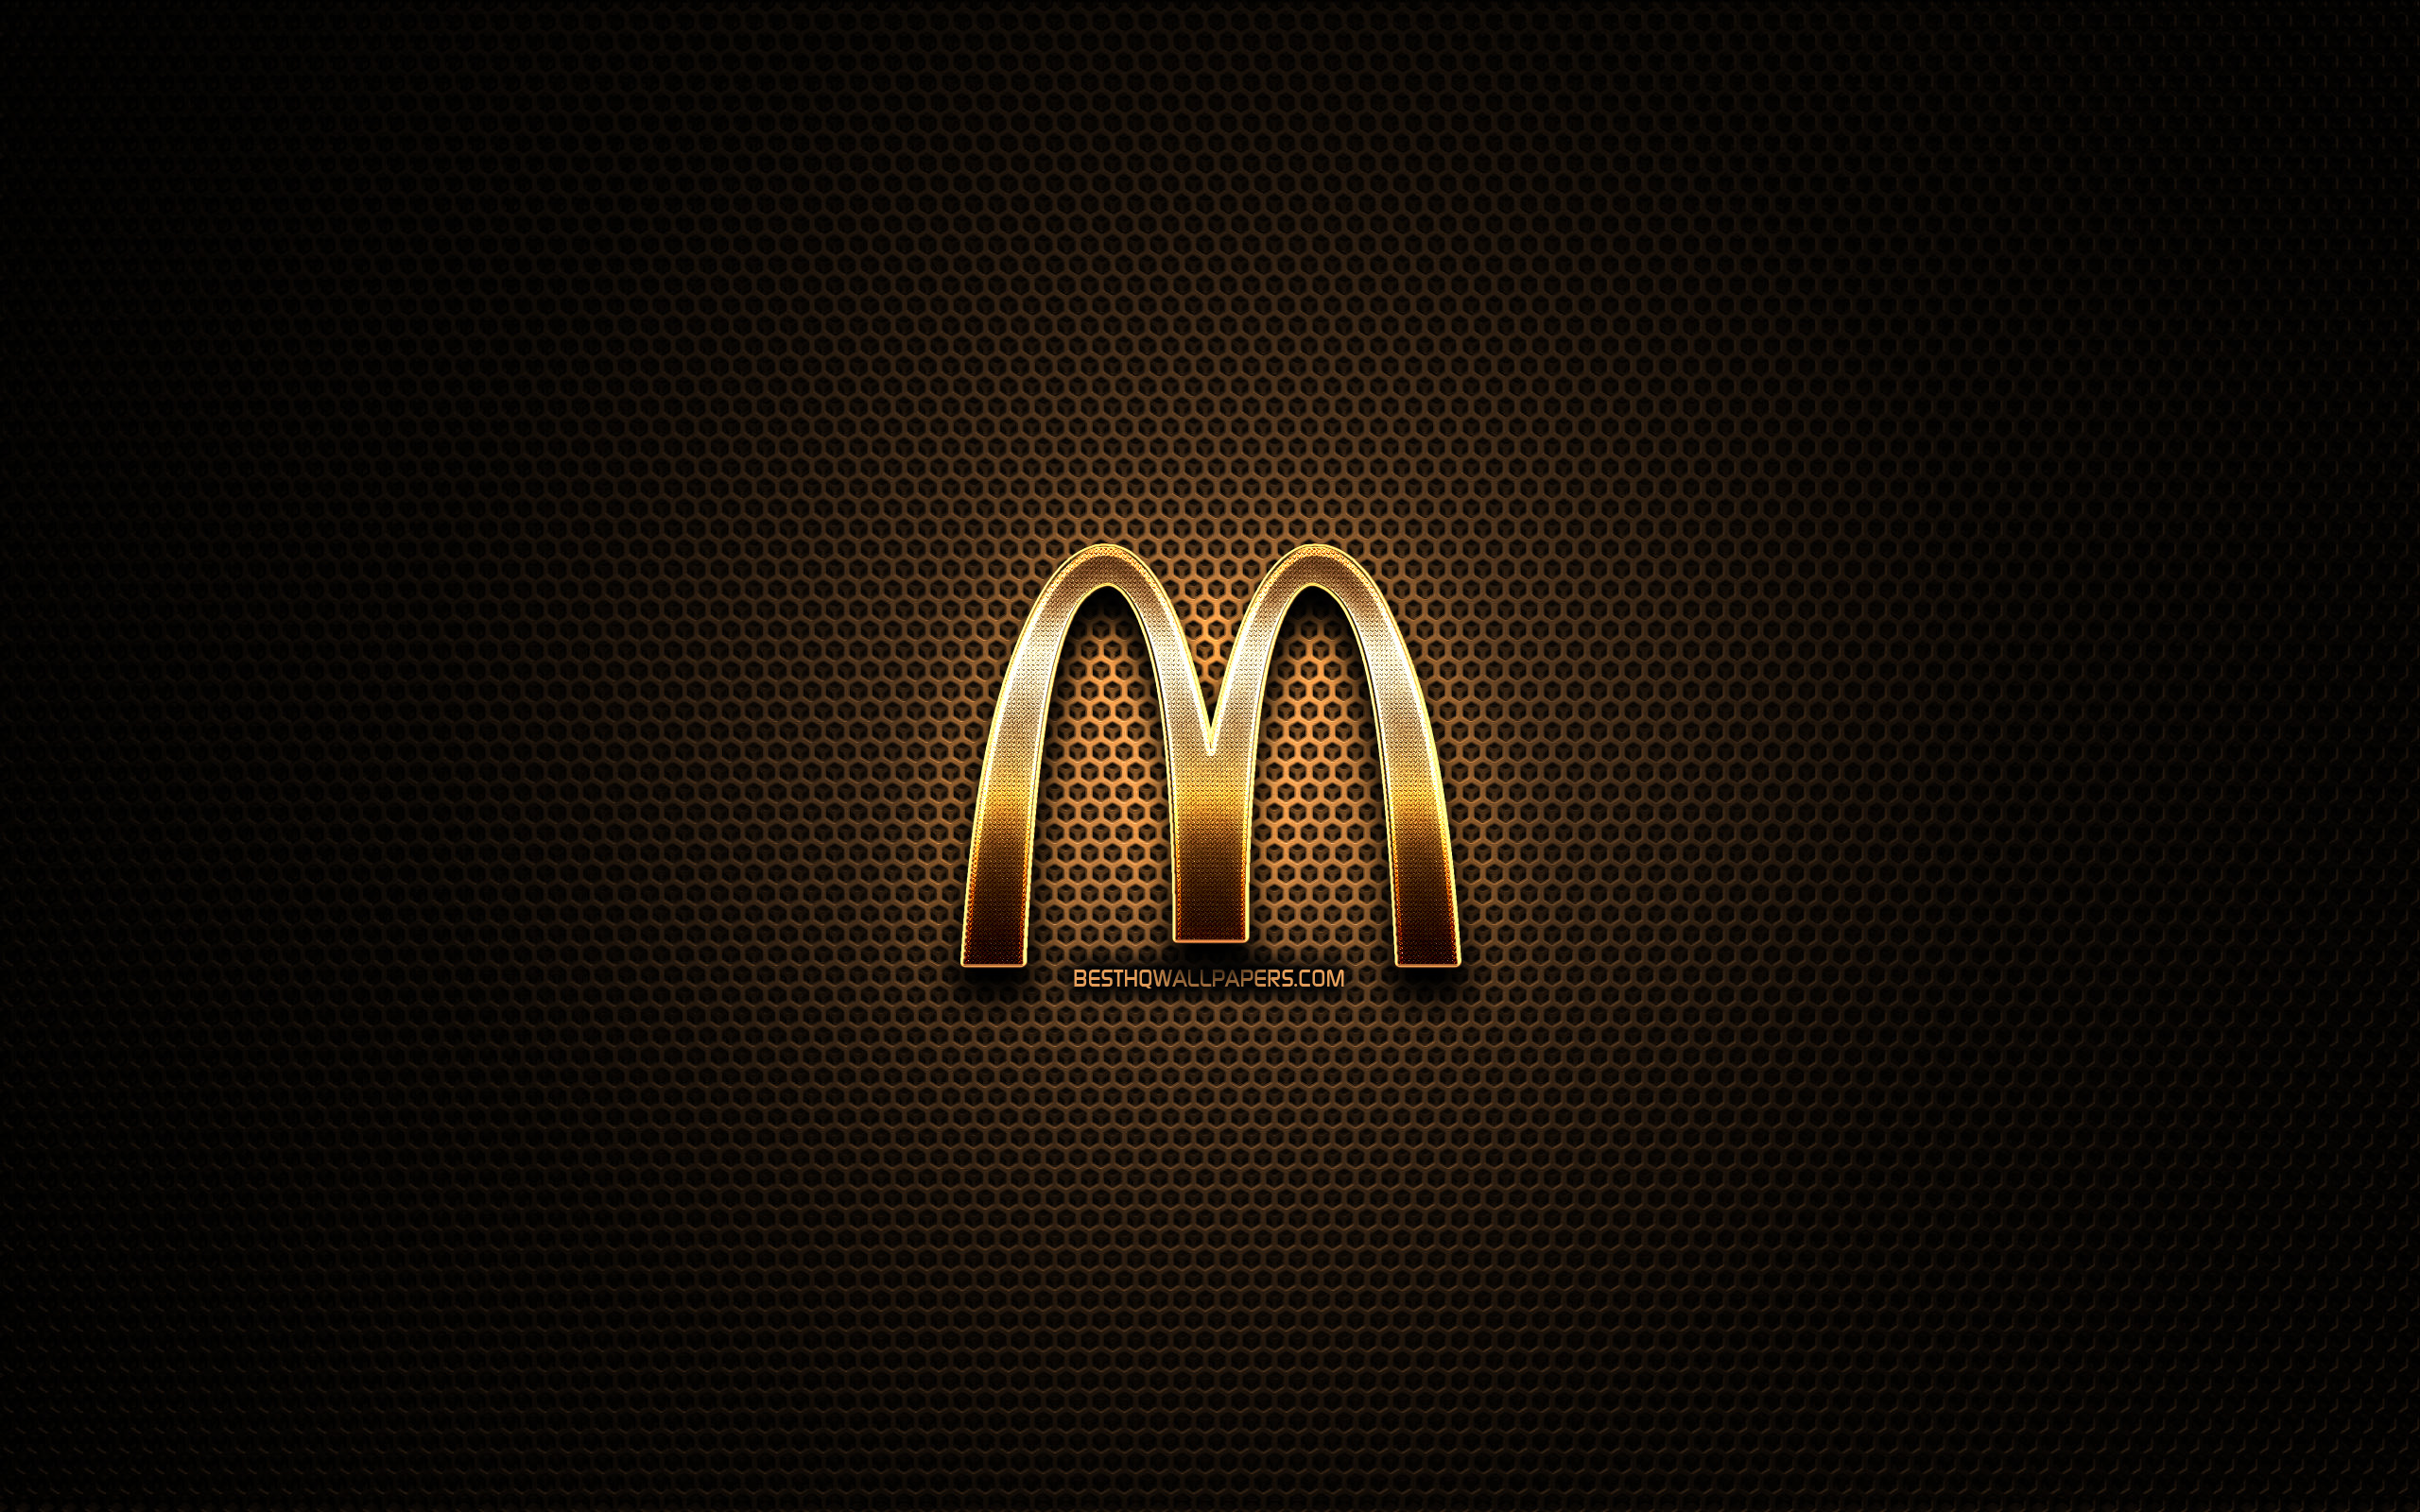 Download wallpaper McDonalds glitter logo, creative, metal grid background, McDonalds logo, brands, McDonalds for desktop with resolution 2560x1600. High Quality HD picture wallpaper